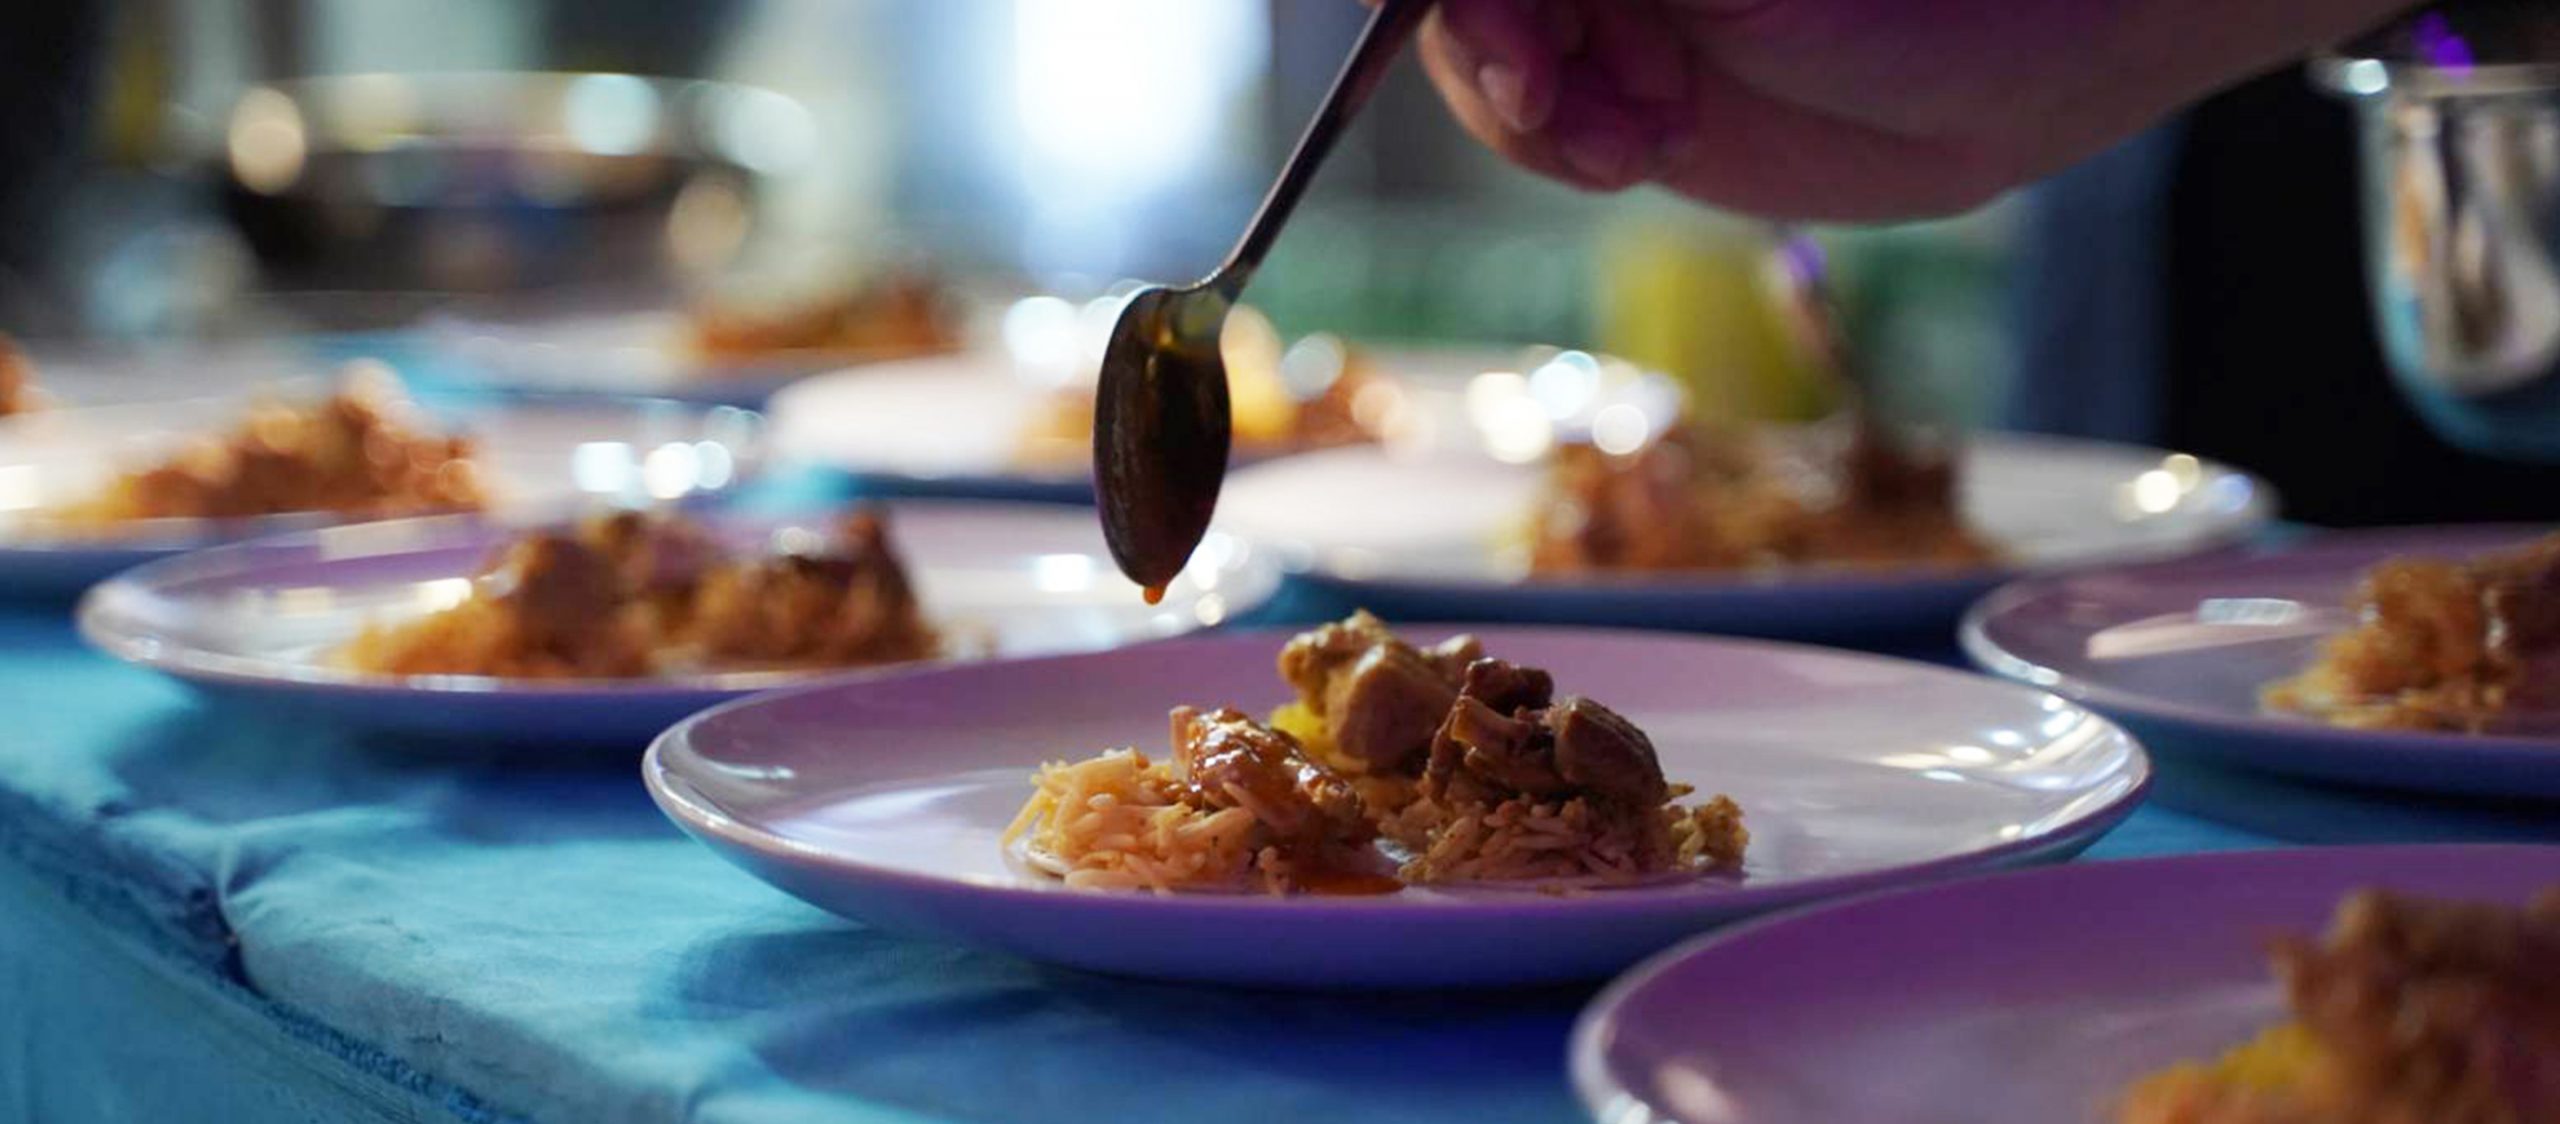 Chef’s Table : ตำรับธนบุรี นามนี้มีนัย และสำรับแห่งความหลากหลายทางชาติพันธุ์